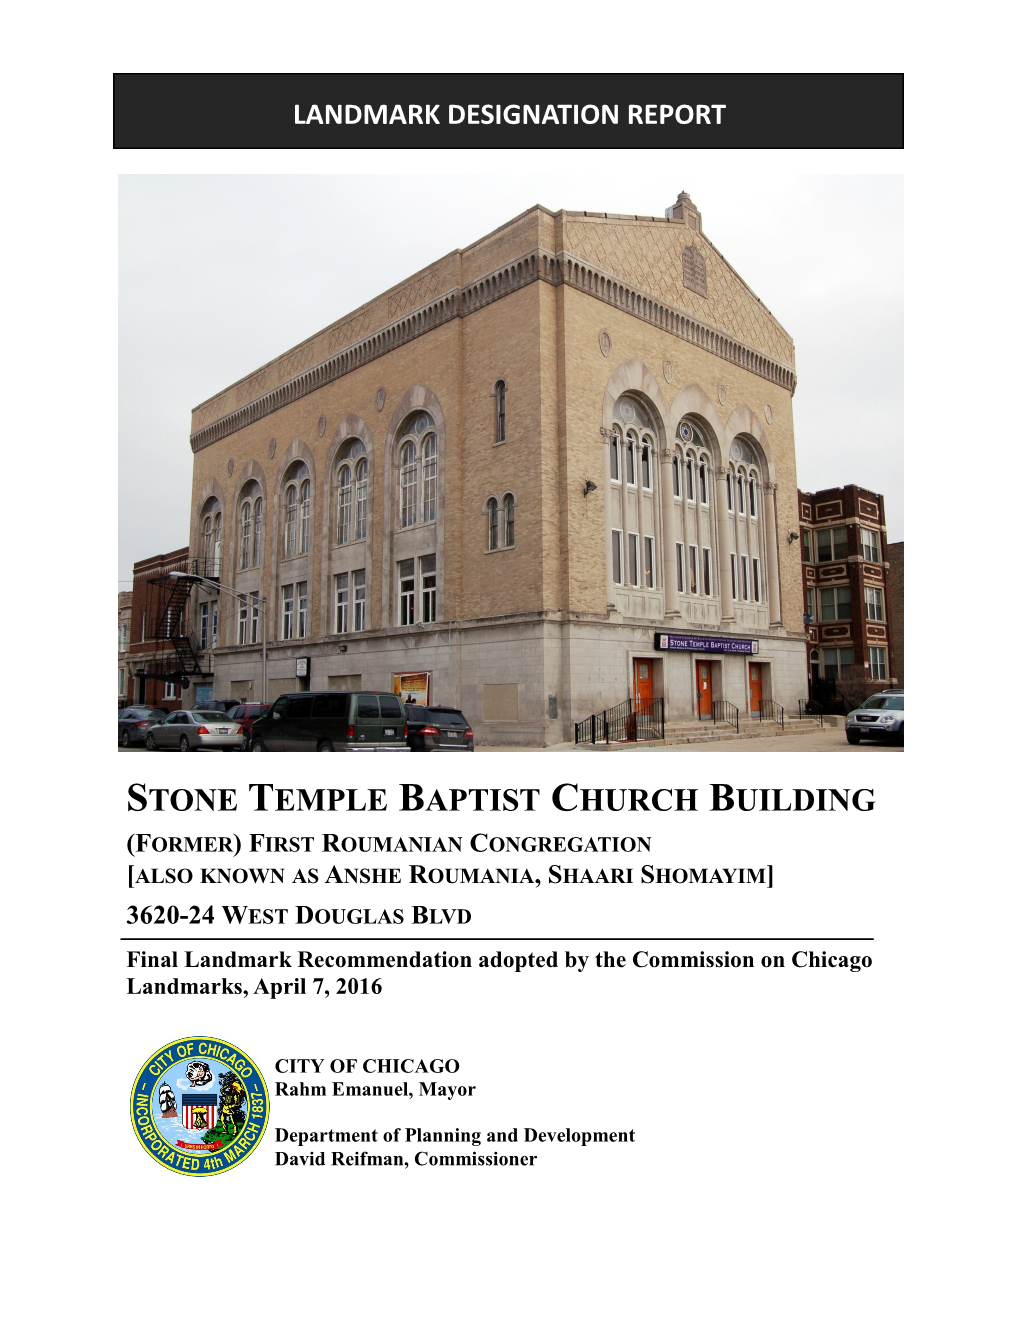 Stone Temple Baptist Church Building